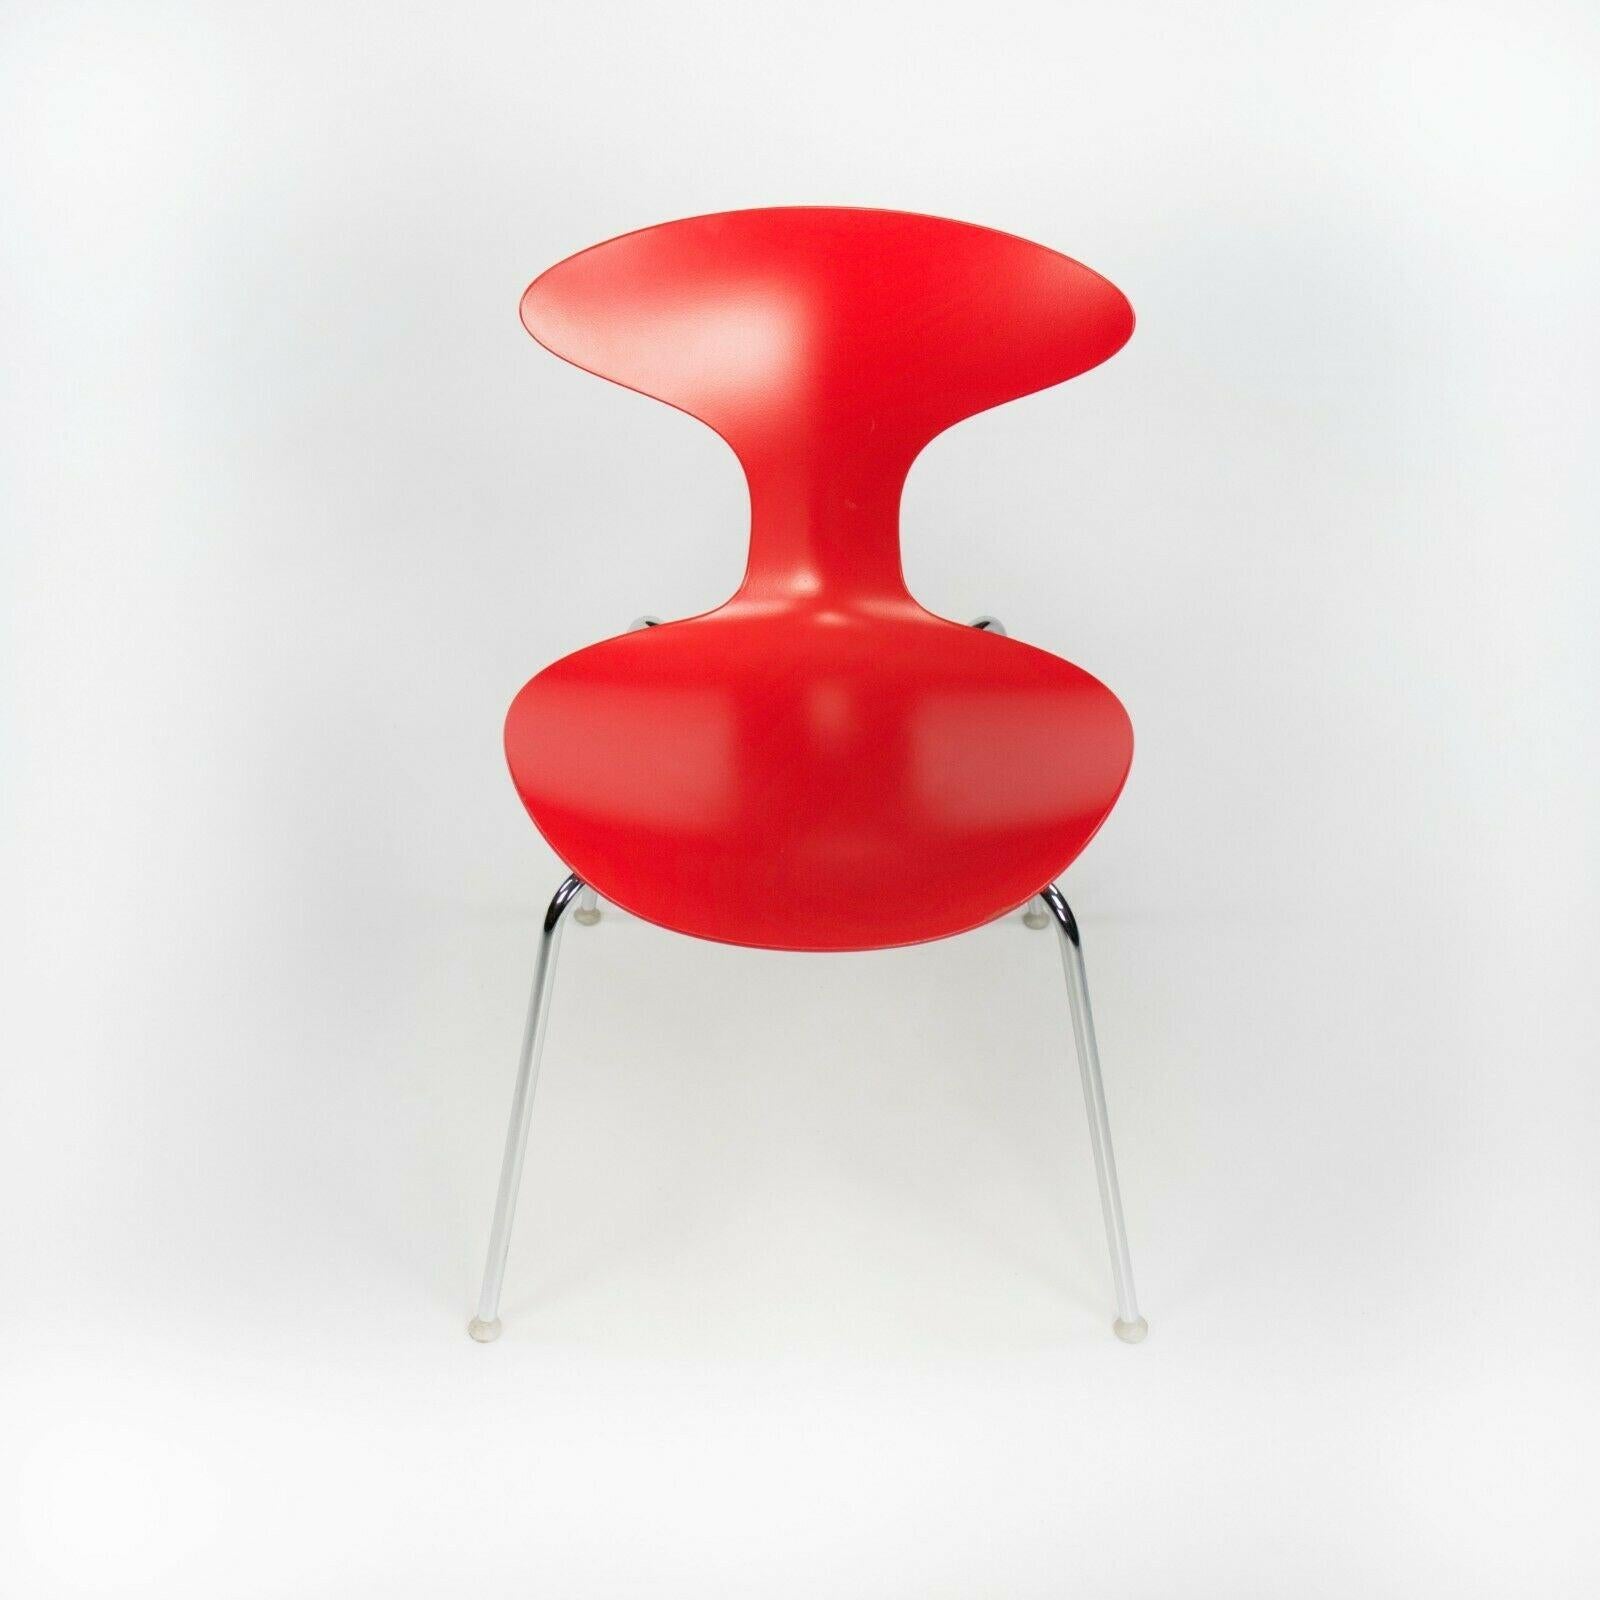 2010s Ross Lovegrove Orbit Chair by Bernhardt Design in Red Plastic Chrome Legs In Good Condition For Sale In Philadelphia, PA